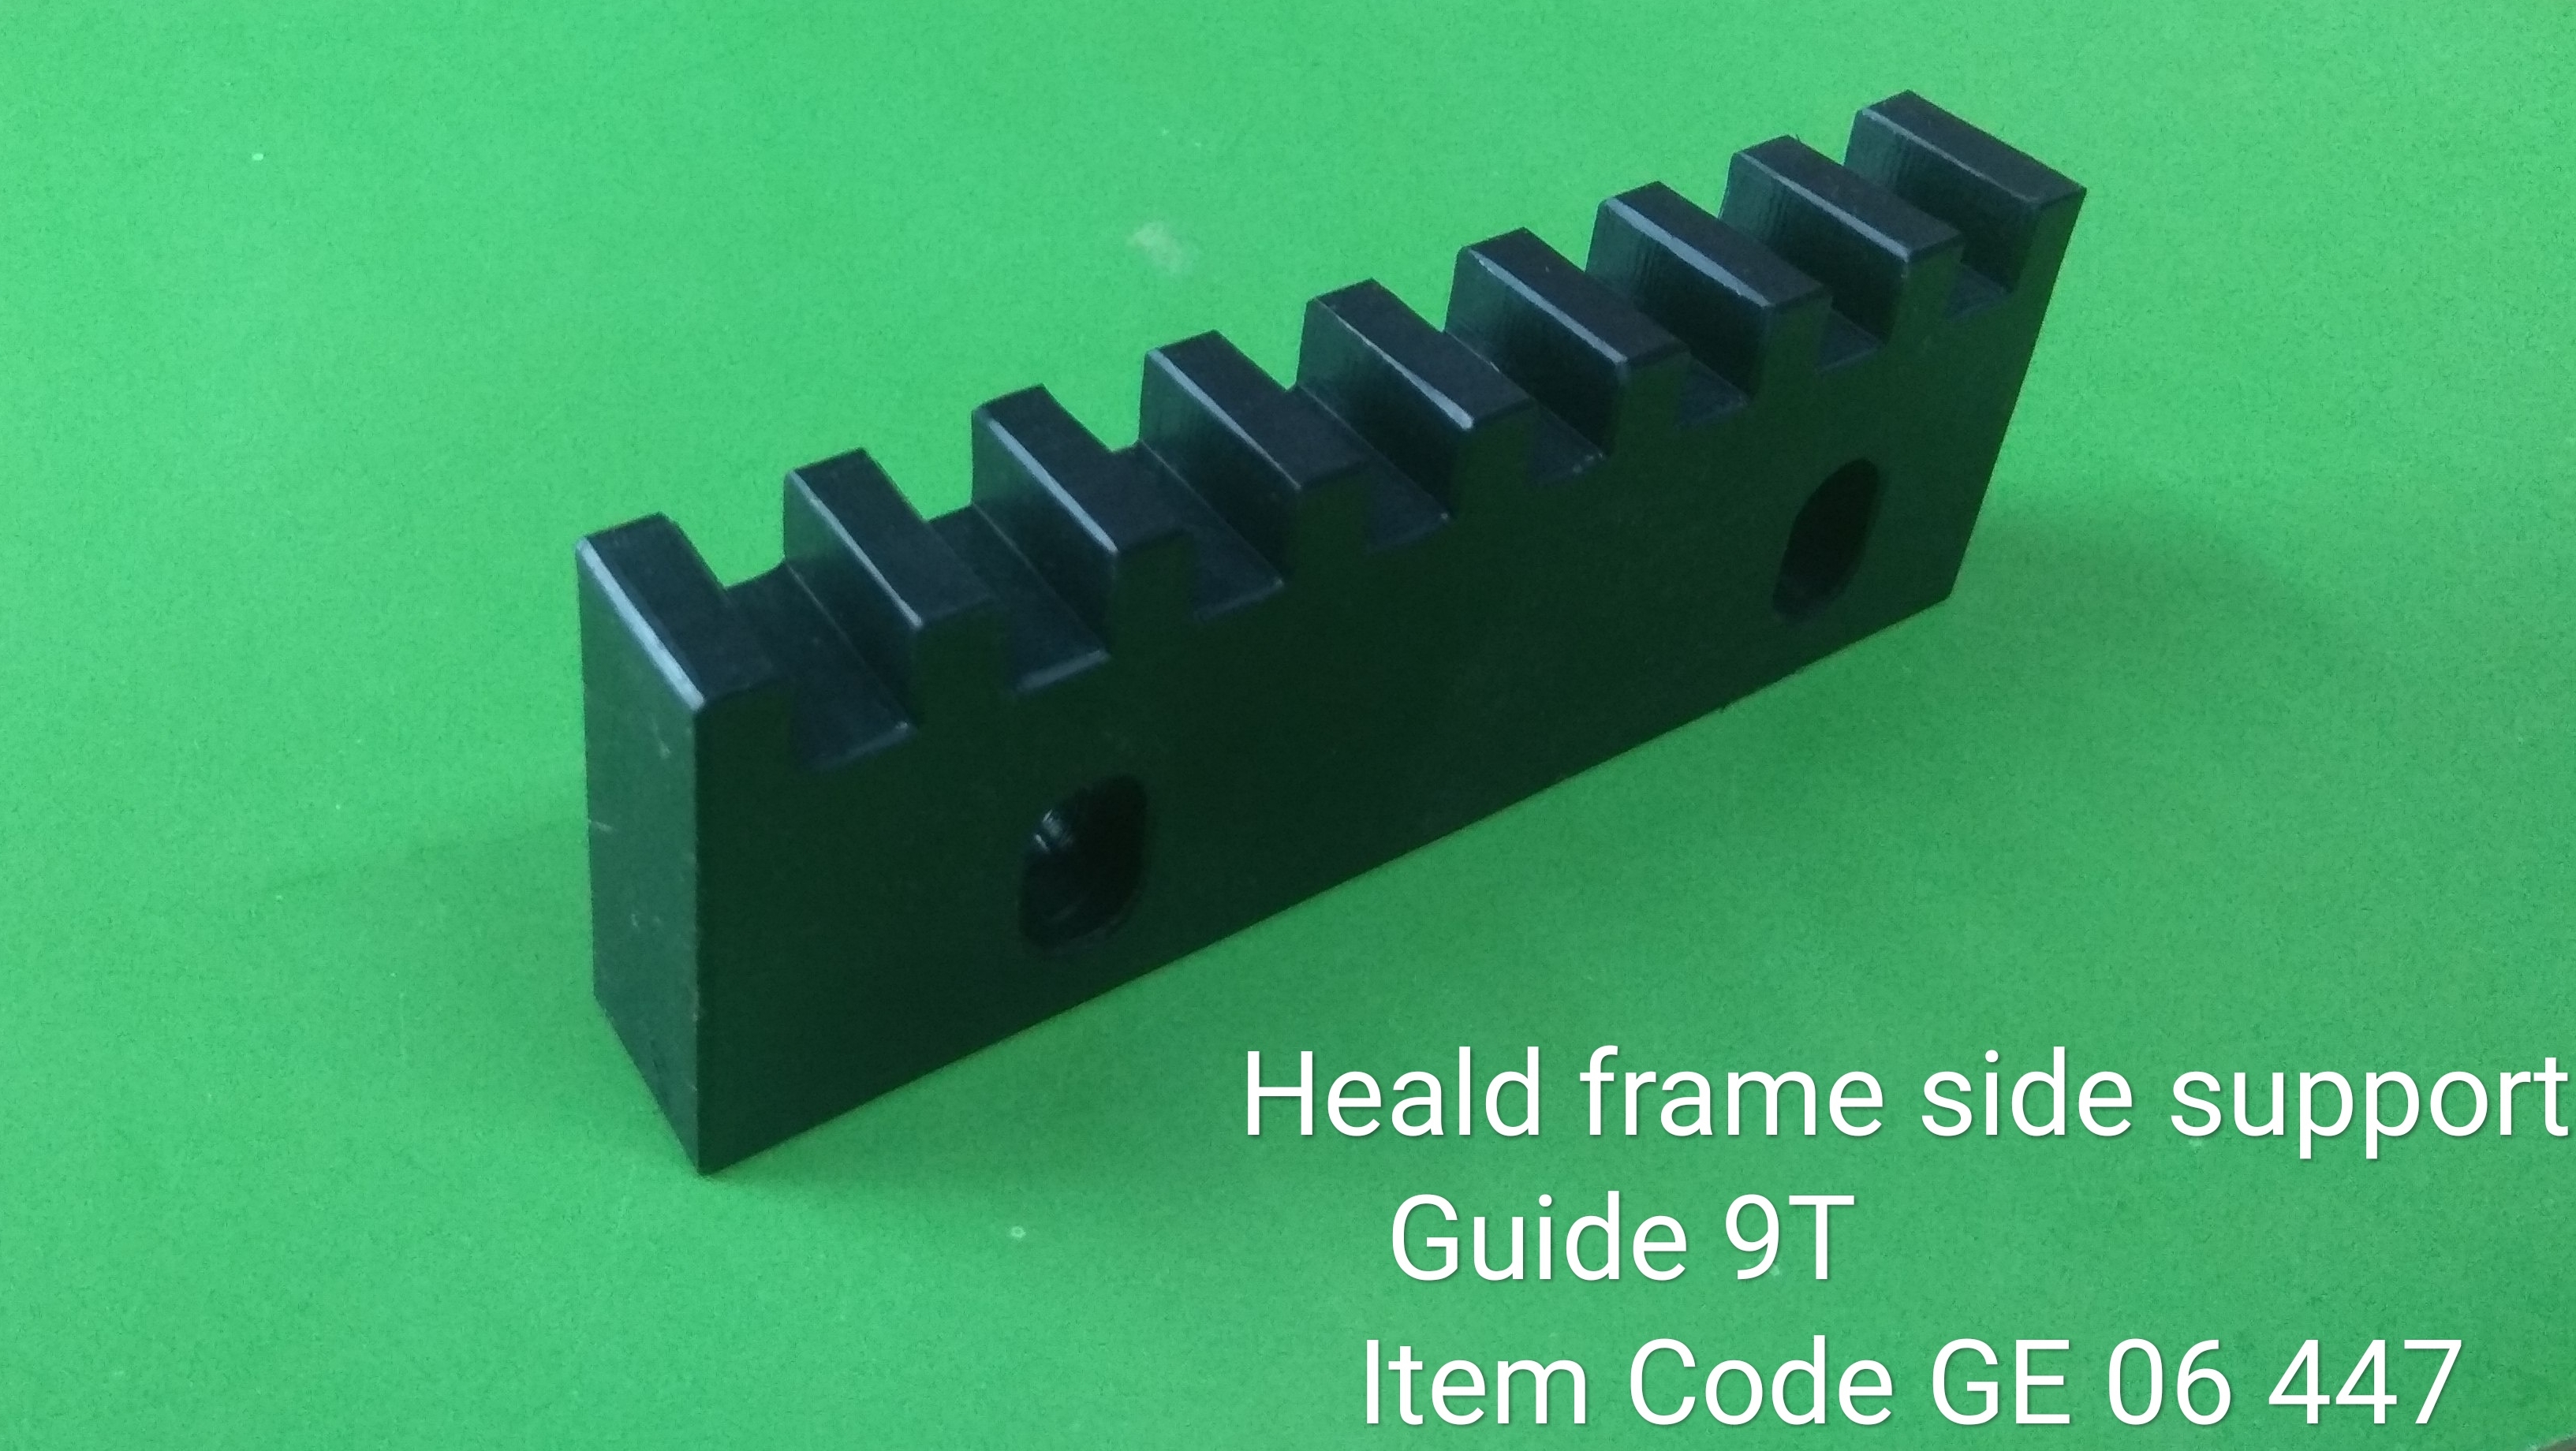 GE_06_447_Heald_Frame_Side_Support_Guide_9T__1_12.jpg